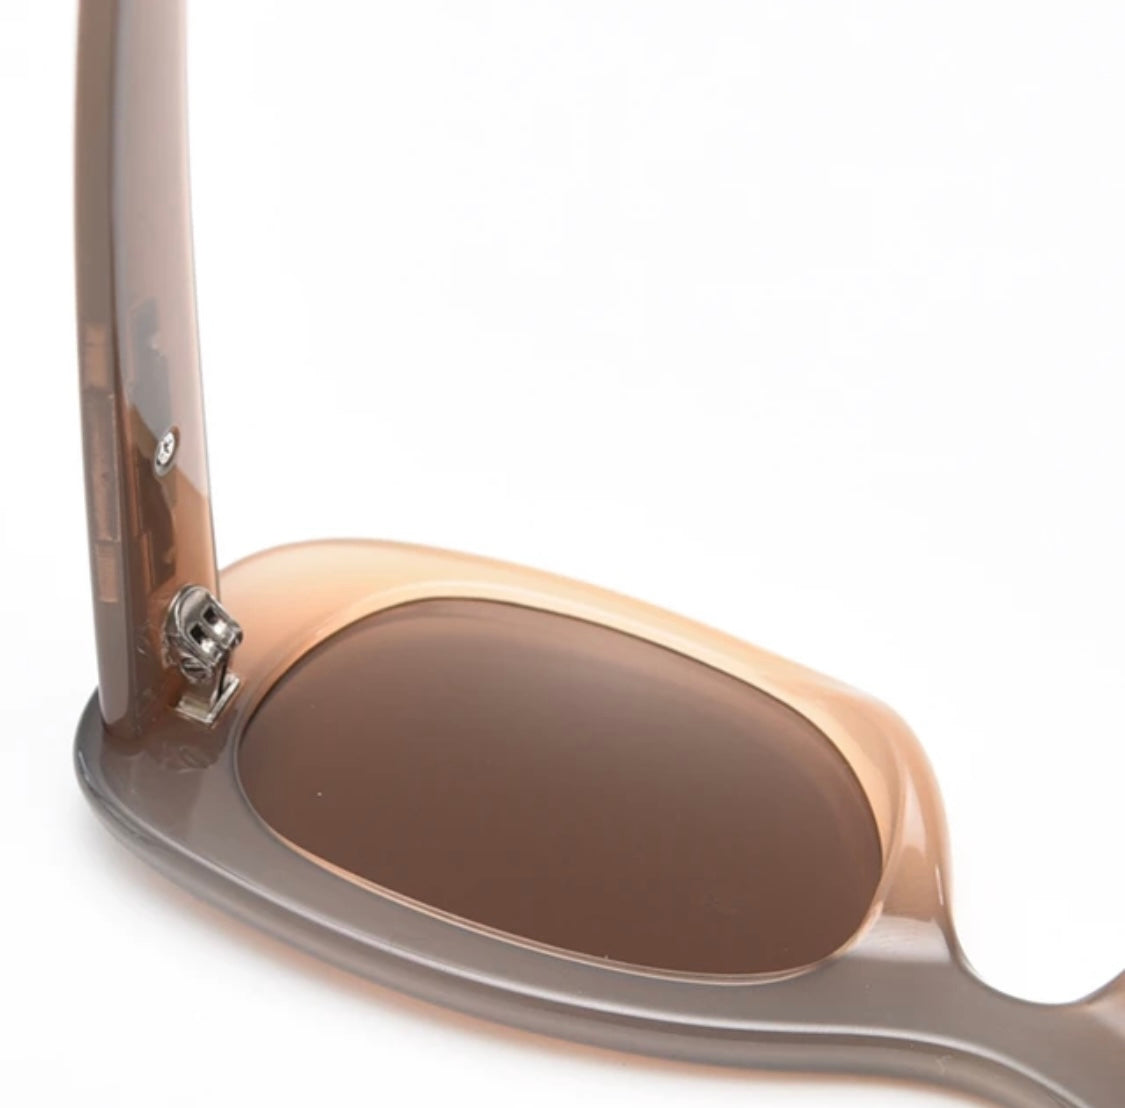 Jodykoes® Retro Style Vintage-Inspired Cat Eye Sunglasses Eyewear For Women (Brown)